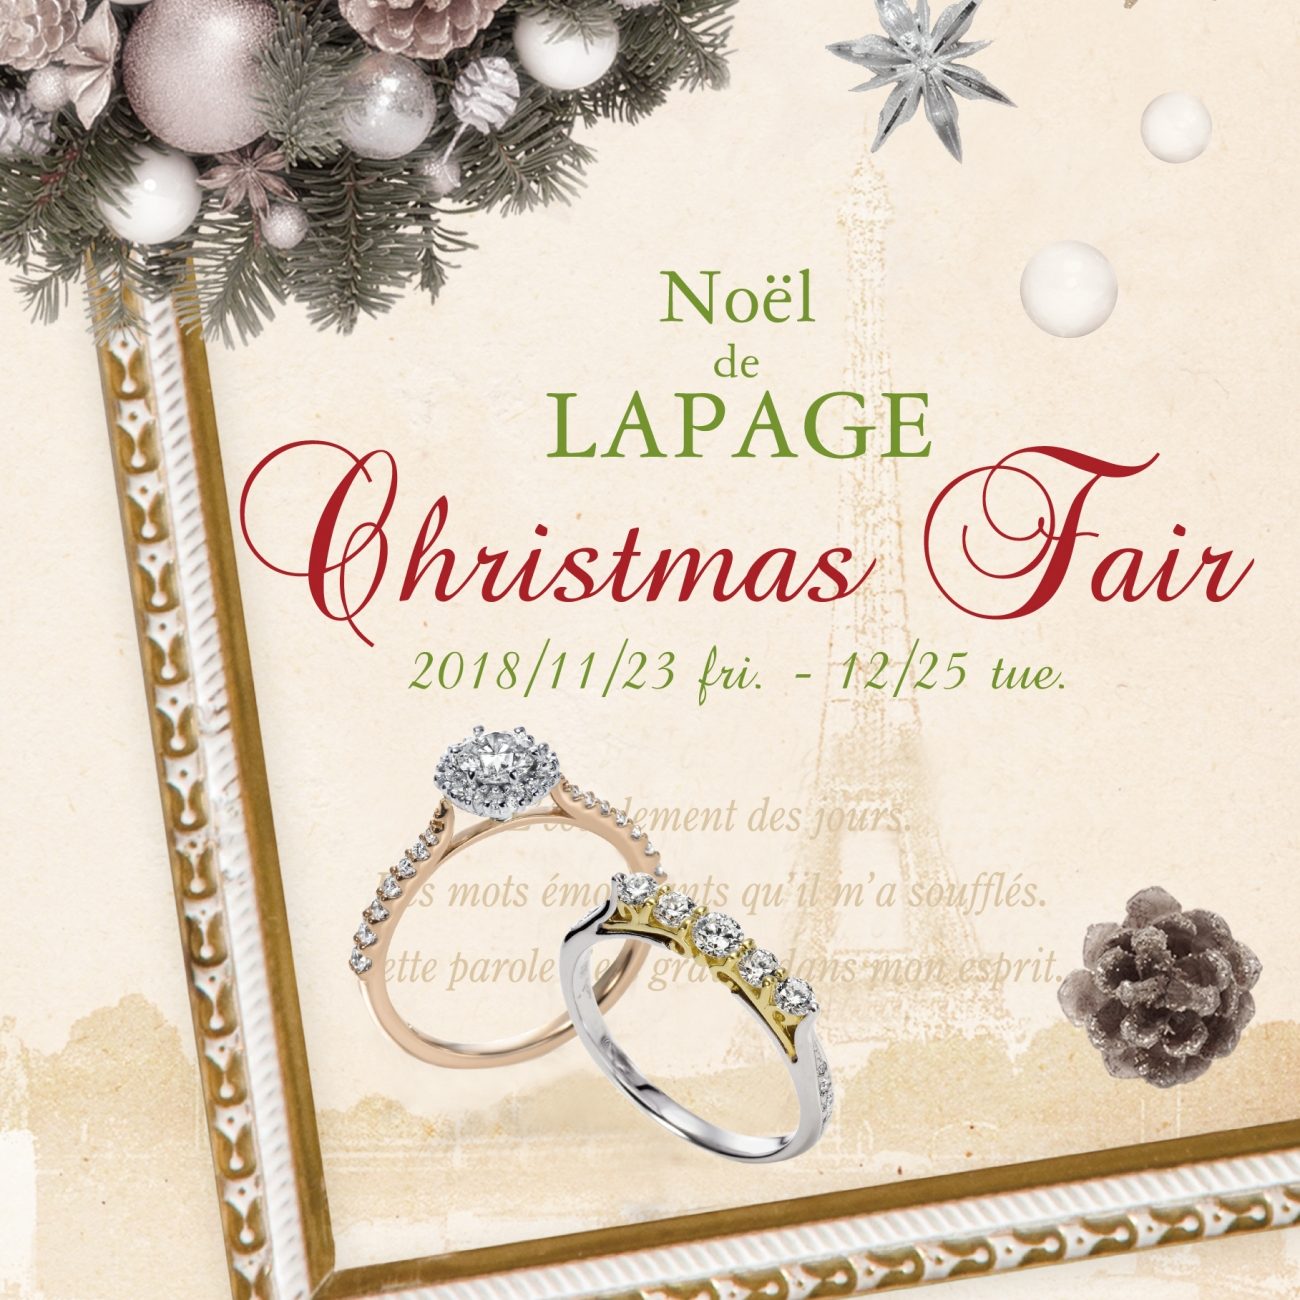 Noel de LAPAGE Christmas Fair　